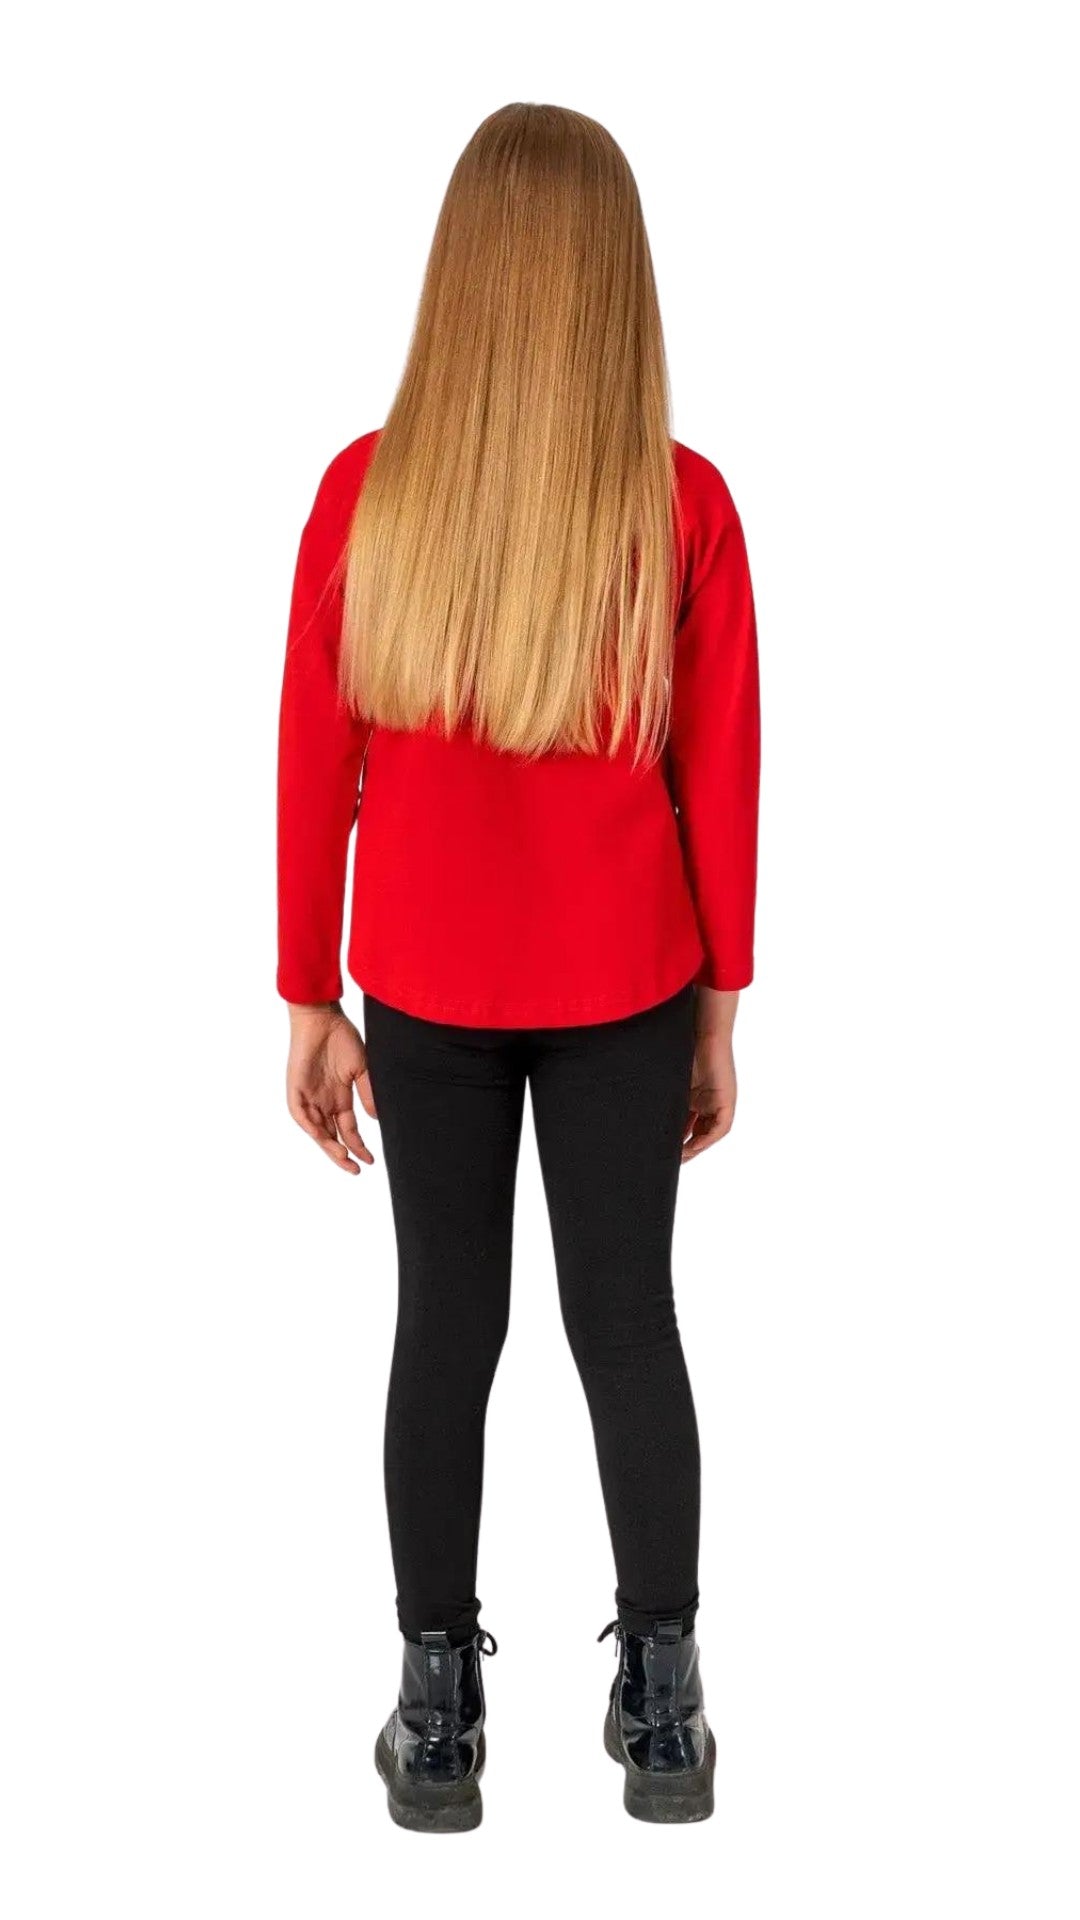 InCity Girls Tween 7-14 Years Regular Fit Red Casual Long Sleeve Comfy Lost T-shirt InCity Boys & Girls